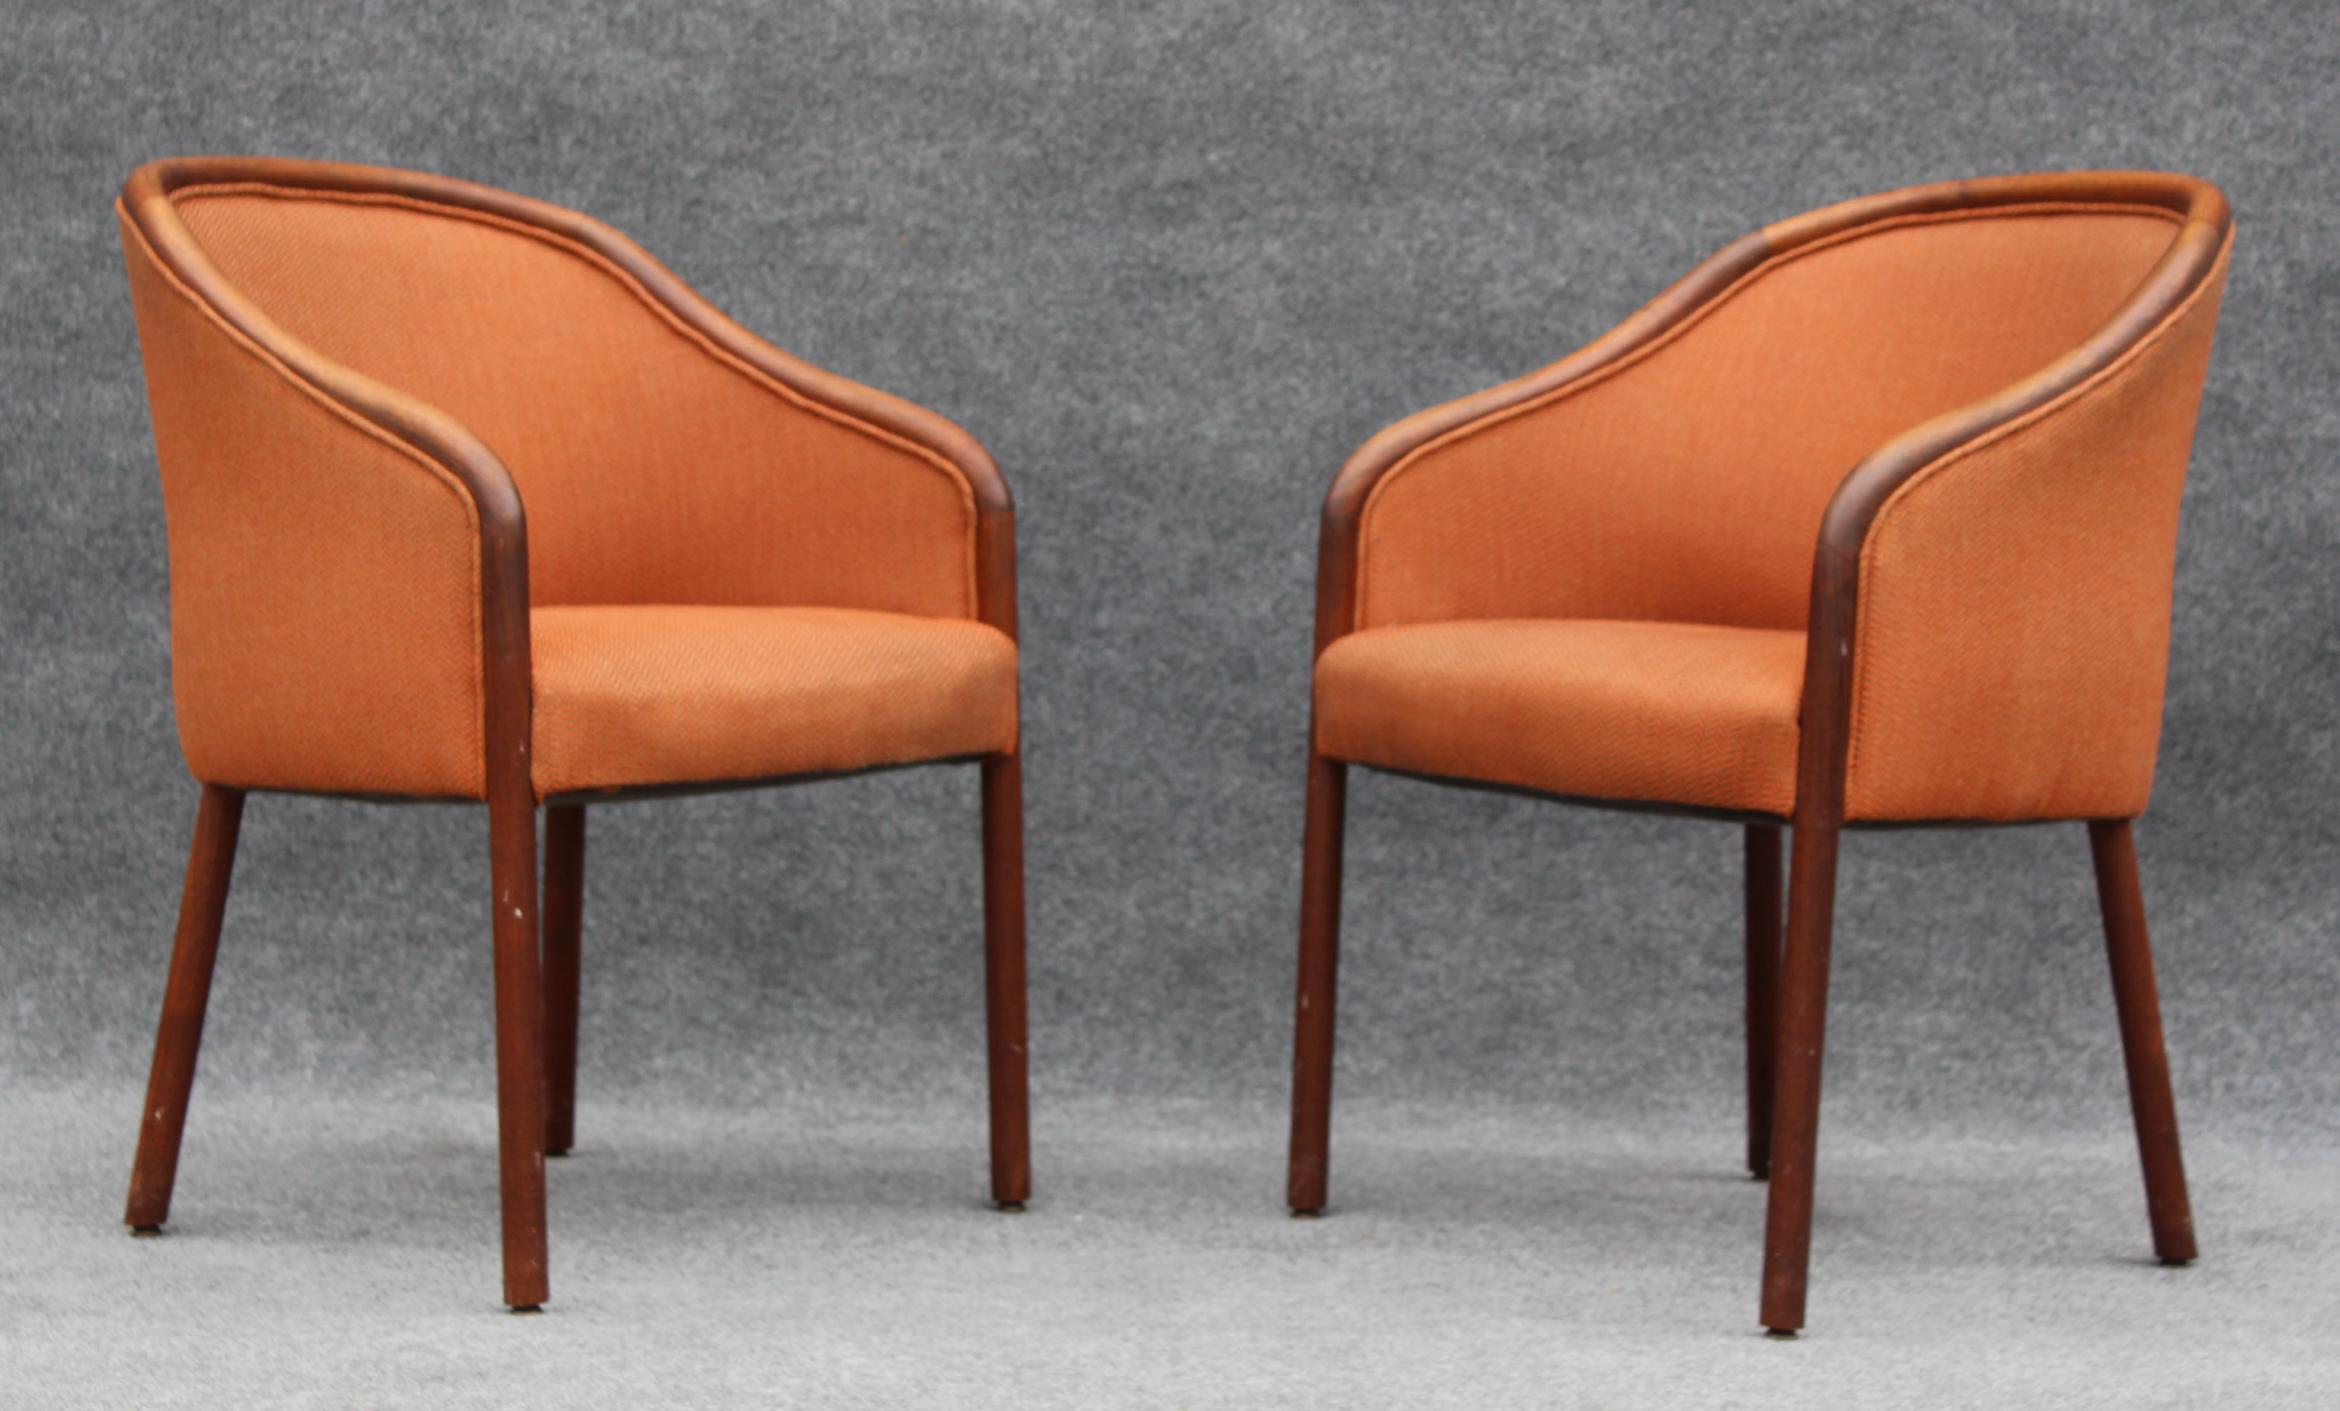 American Pair of Mid-Century Modern Walnut Armchair Side Chairs After Ward Bennett